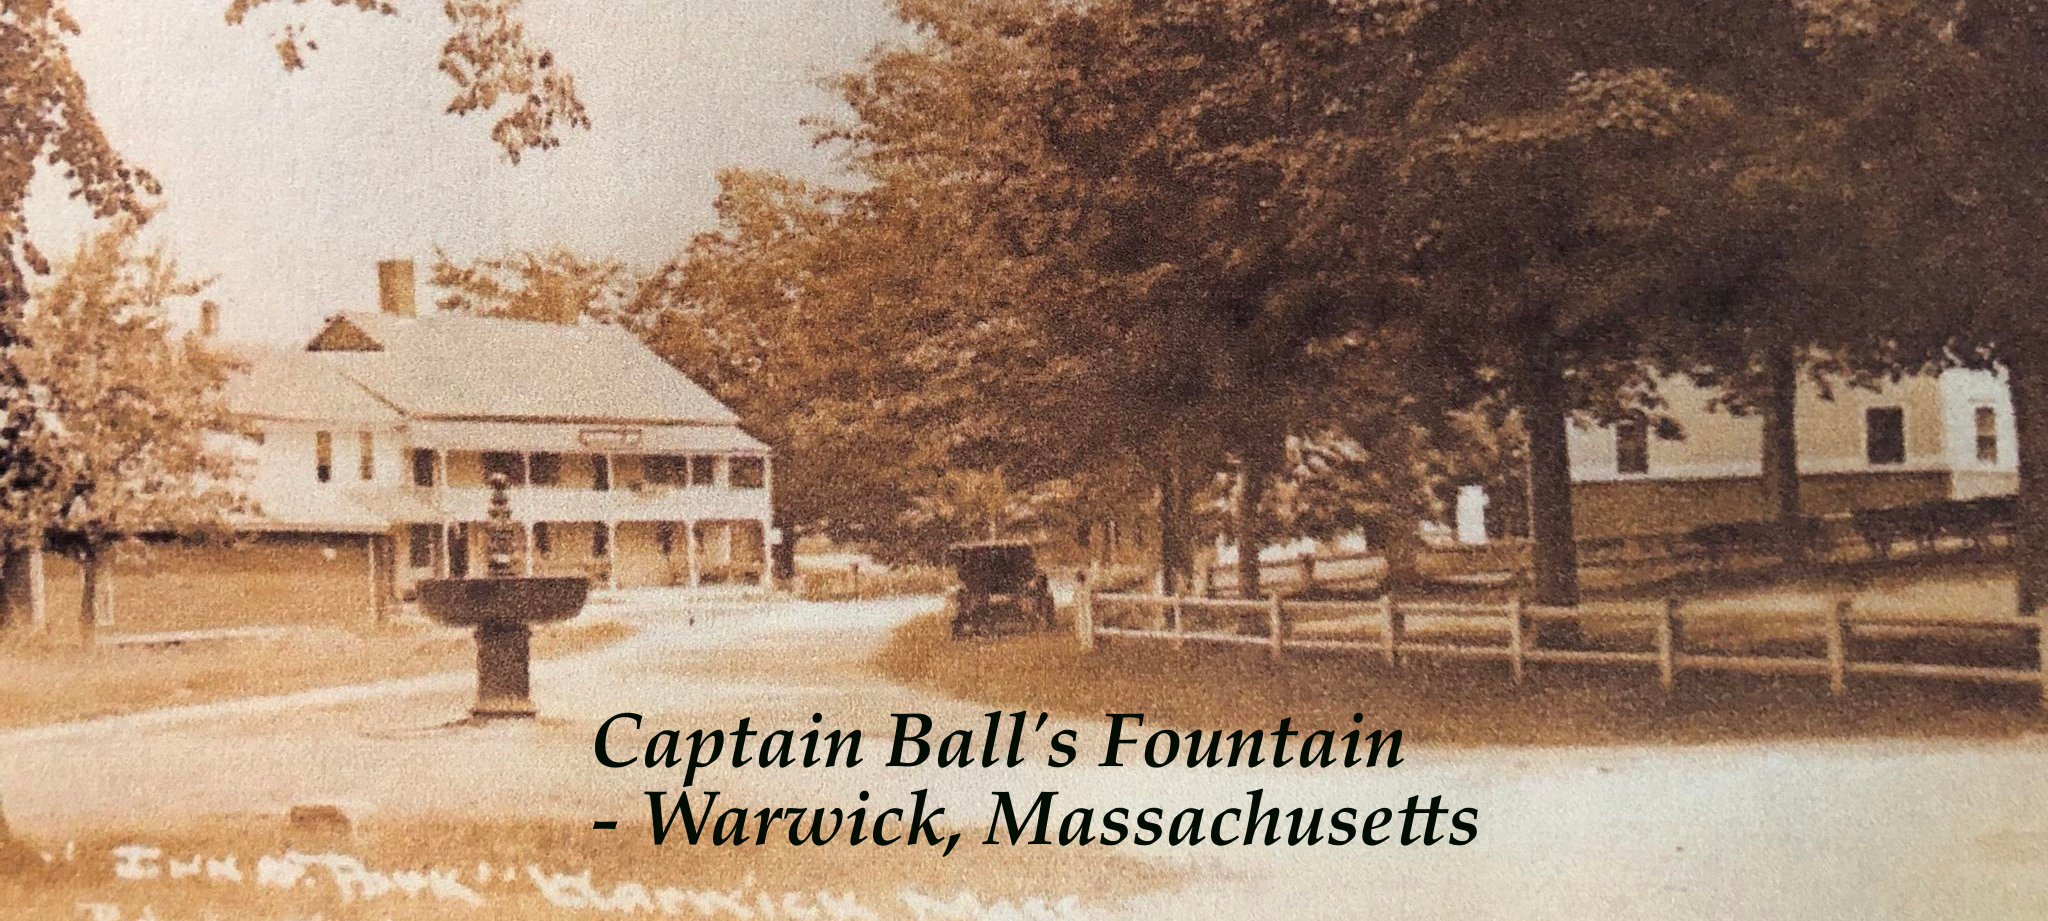 Captain Ball's Fountain in Warwick, Massachusetts